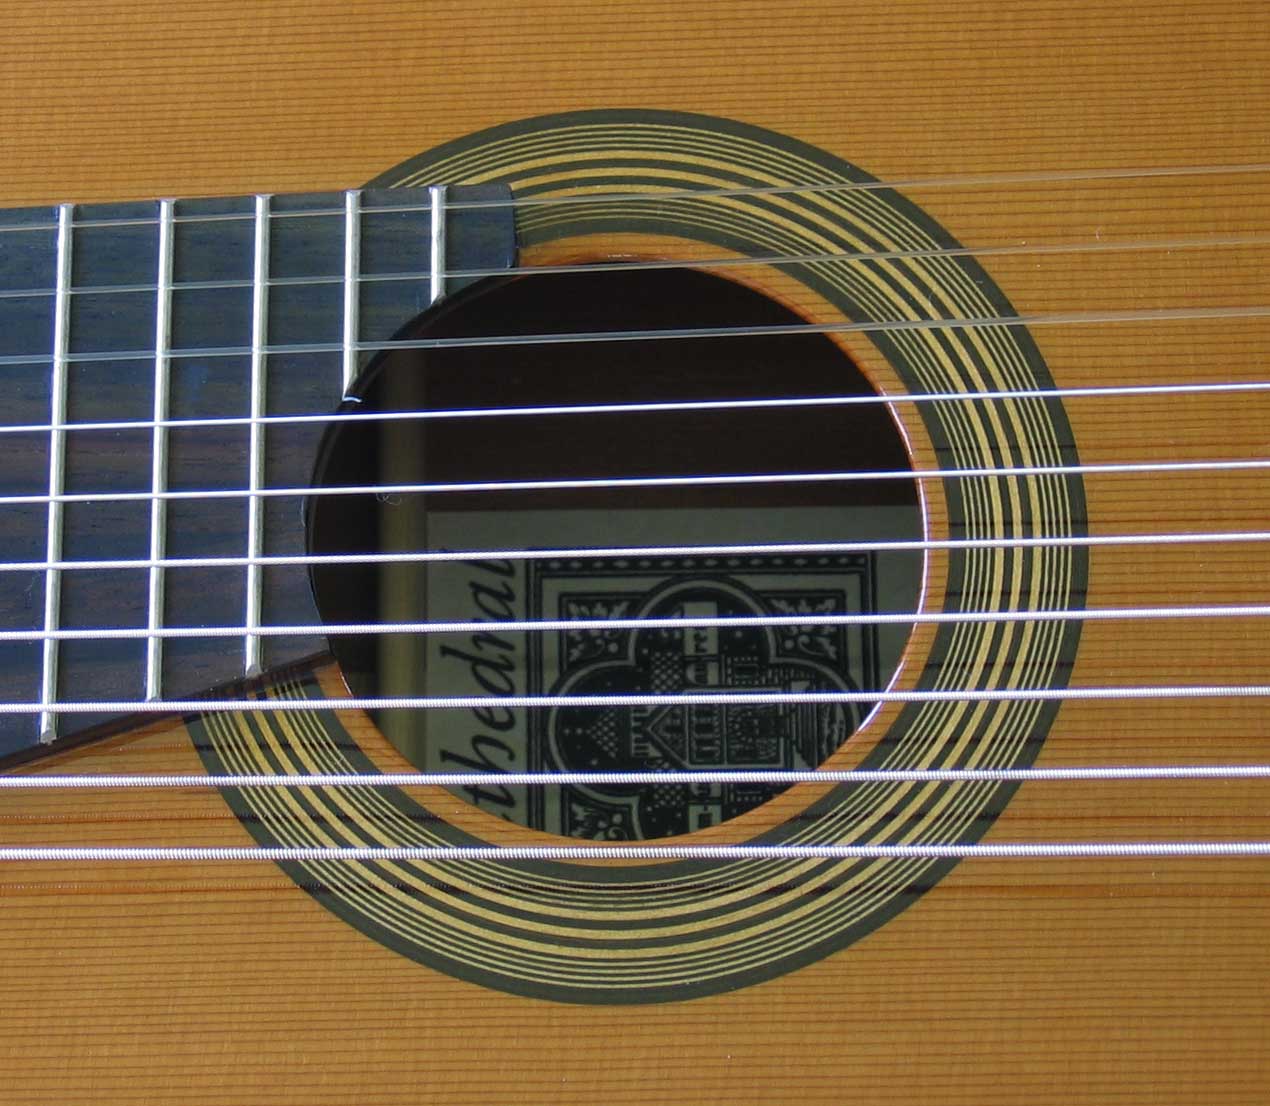 Cathedral Guitar Model 15 Cedar / Mahogany Classical 10-String Harp Guitar w/ Case